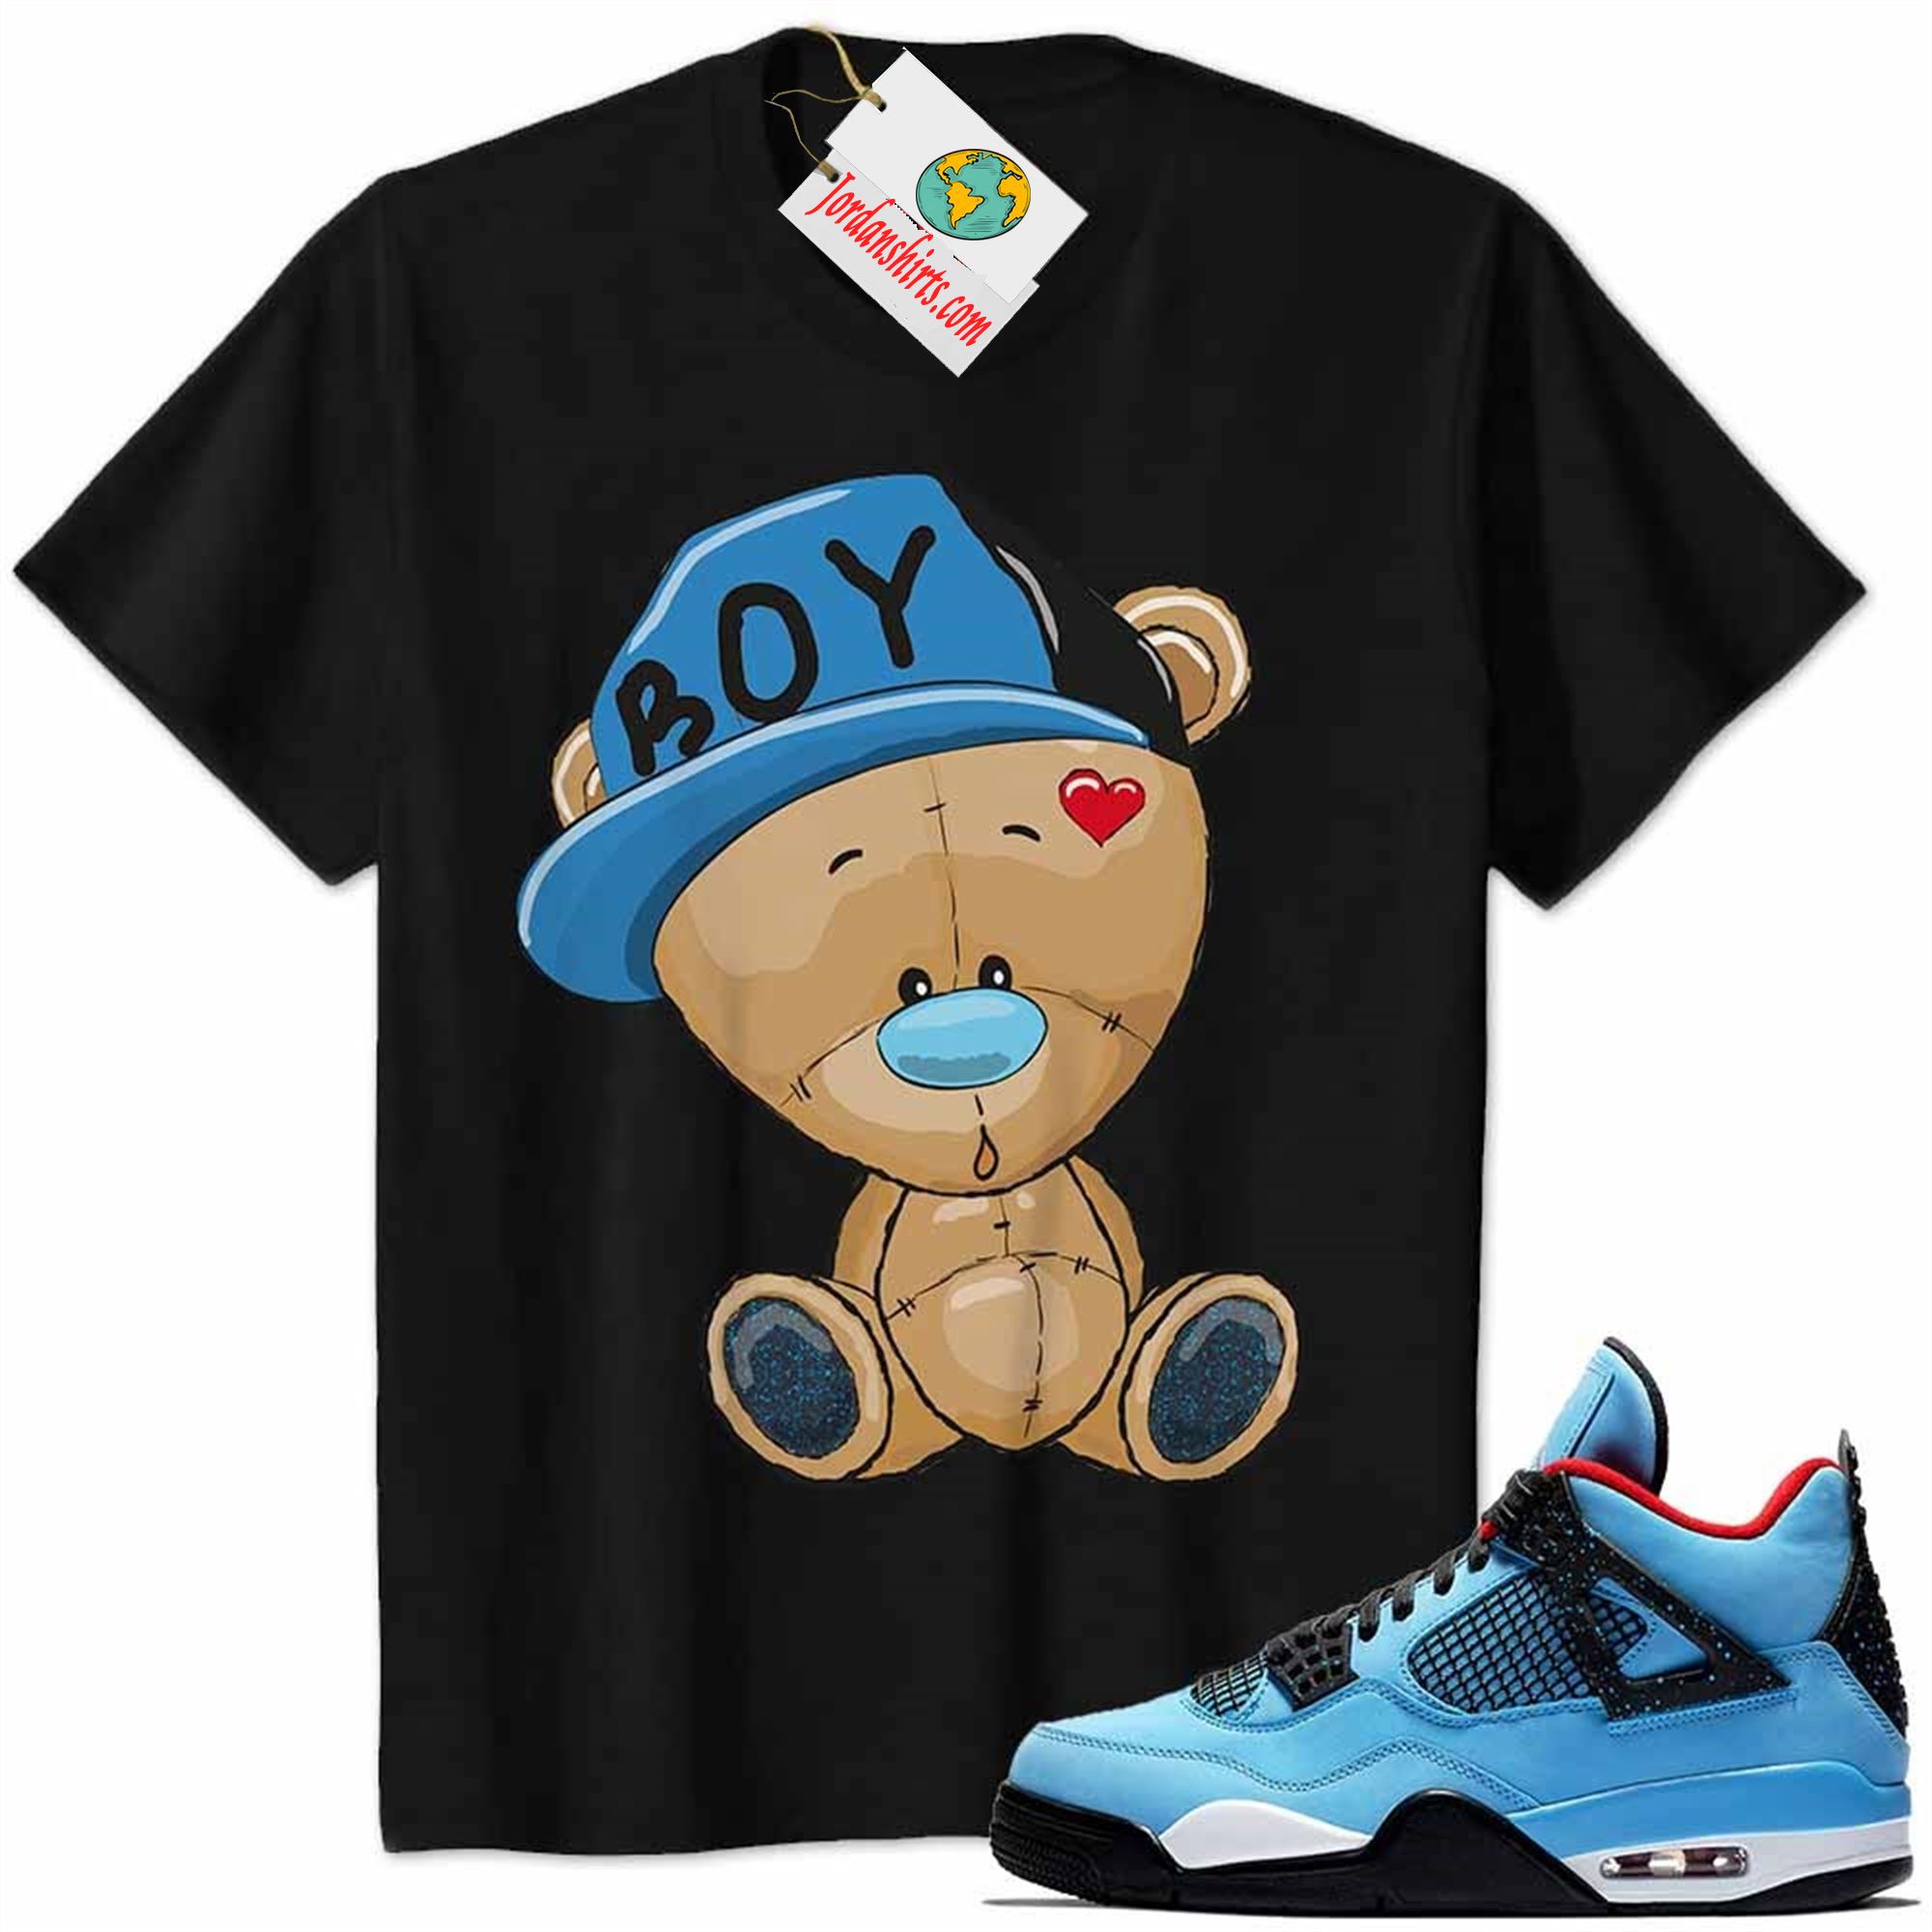 Jordan 4 Shirt, Jordan 4 Cactus Jack Travis Scott Shirt Cute Baby Teddy Bear Black Plus Size Up To 5xl